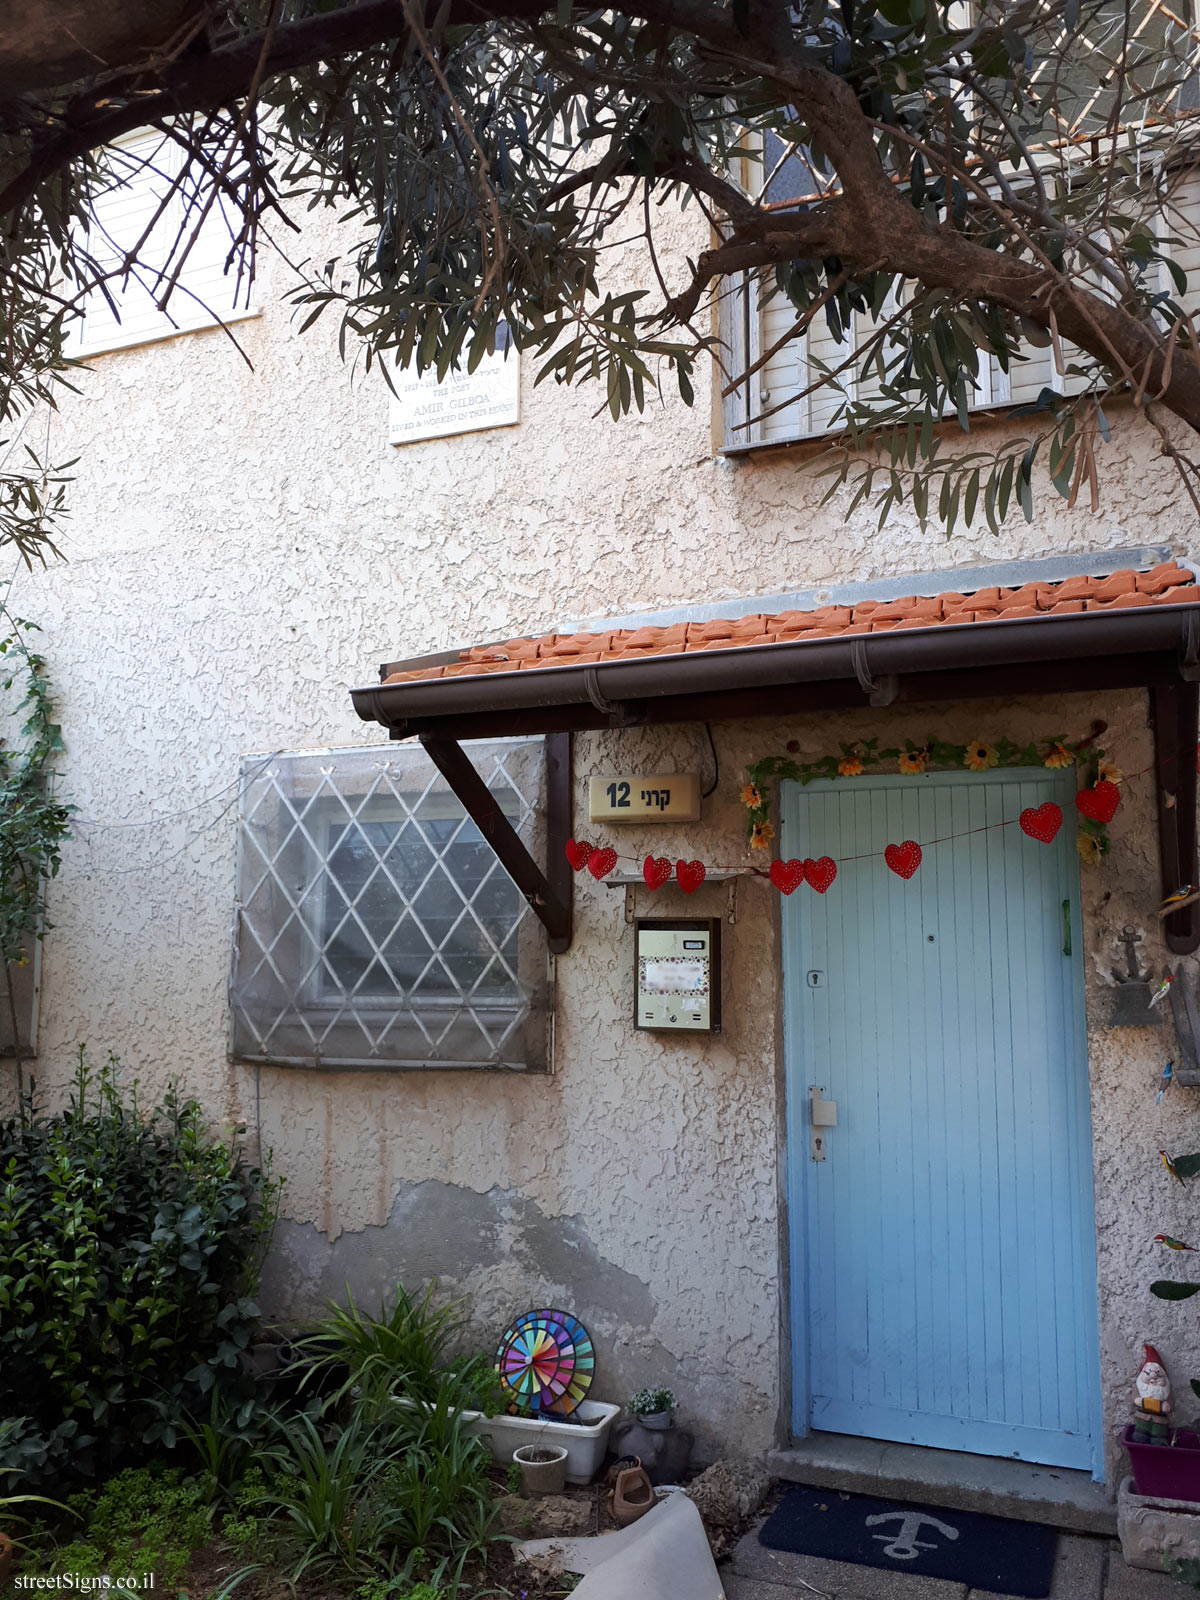 The house of Amir Gilboa - Yehuda Karni St 12, Tel Aviv-Yafo, Israel